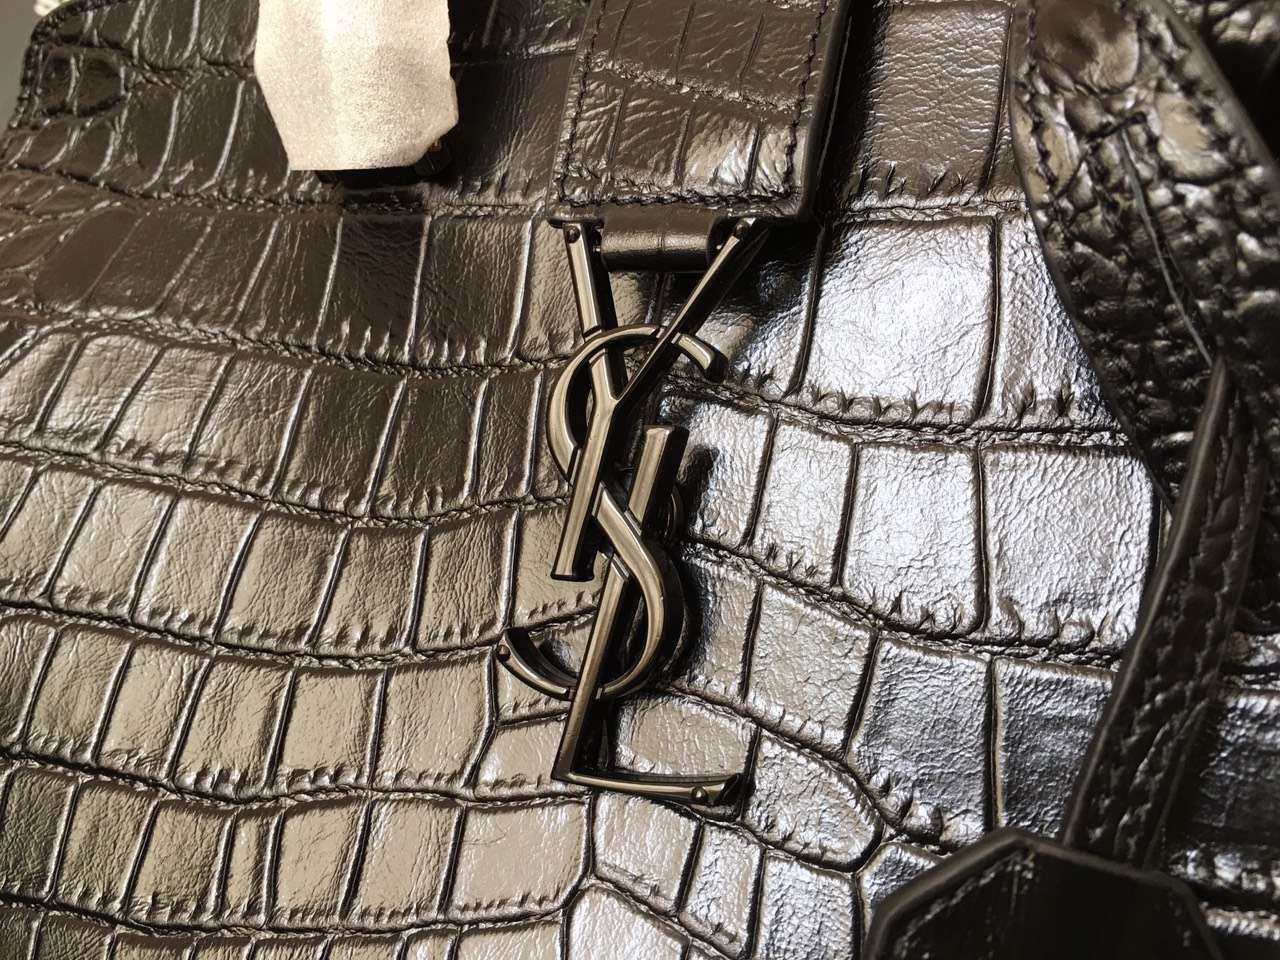 S/S 2016 New Saint Laurent Bag Cheap Sale-Saint Laurent Small Monogram Cabas Bag in Black Crocodile Embossed Leather - Click Image to Close